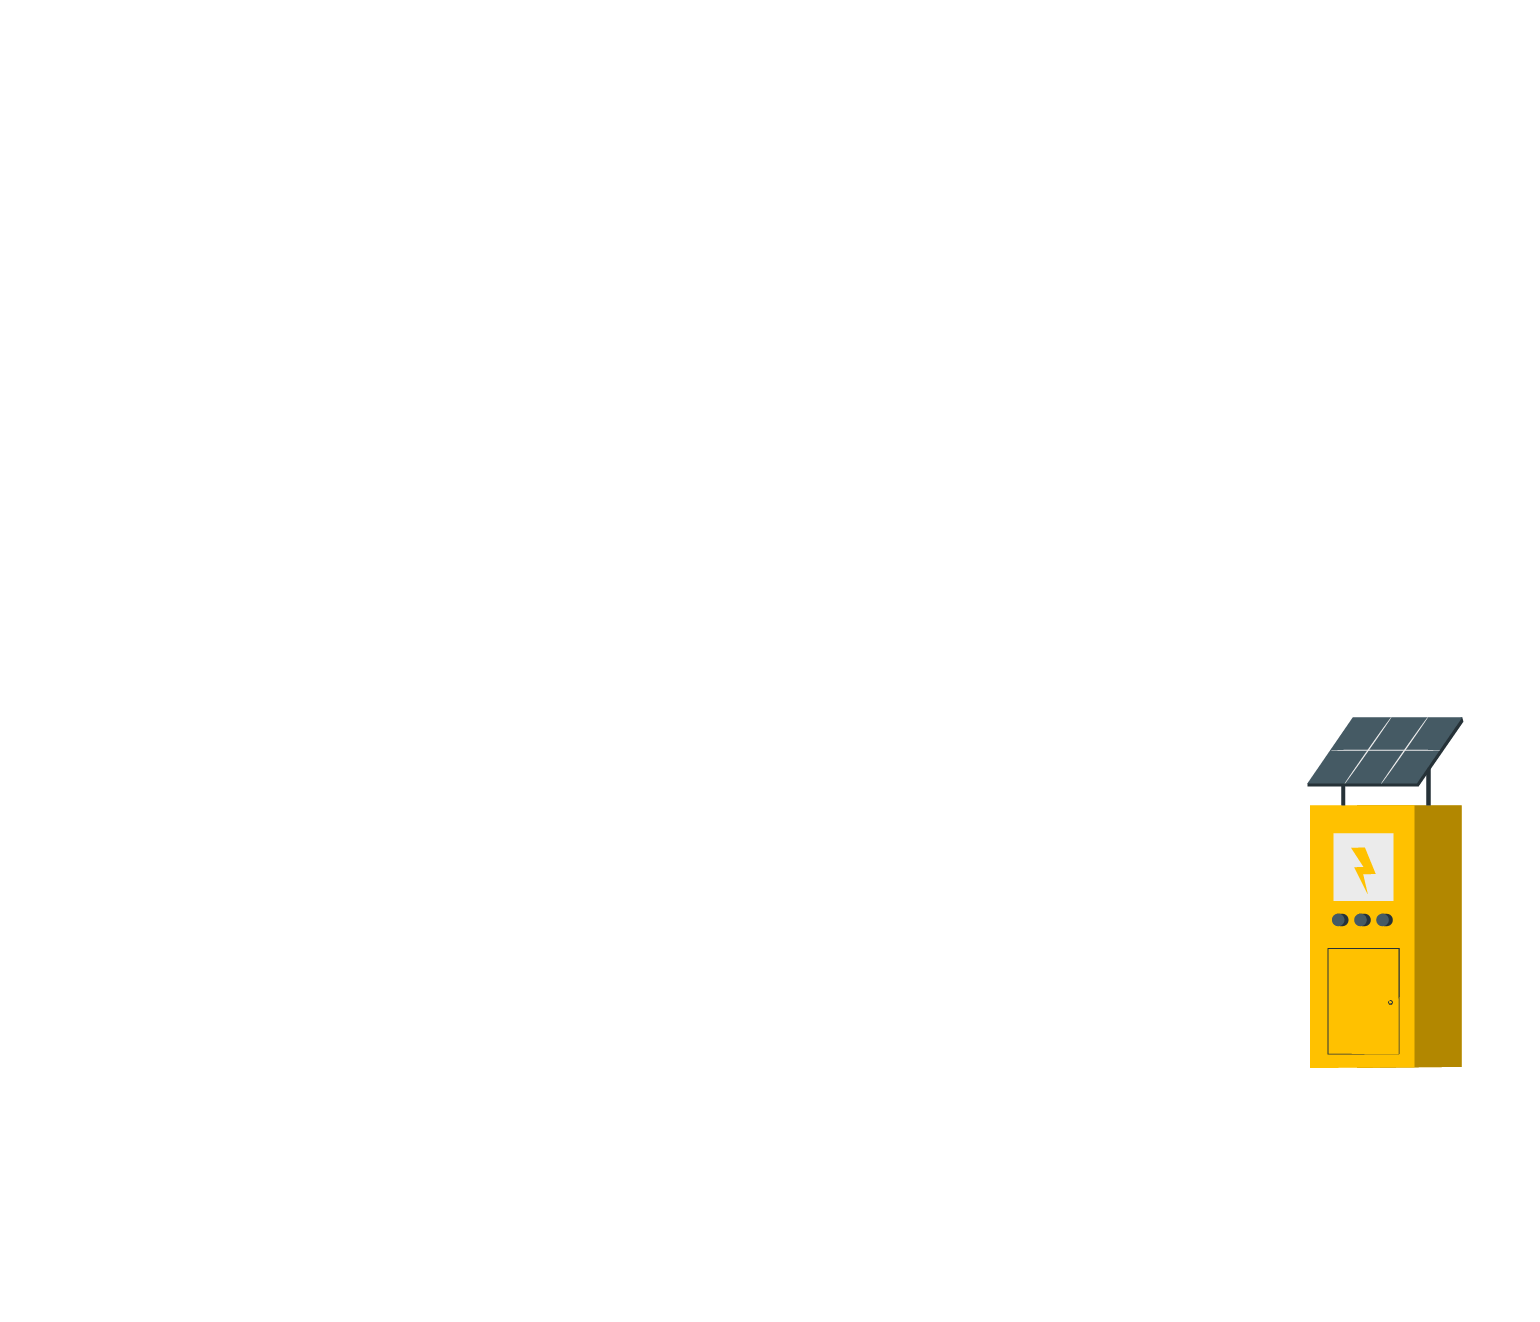 solar powered electricity station illustration